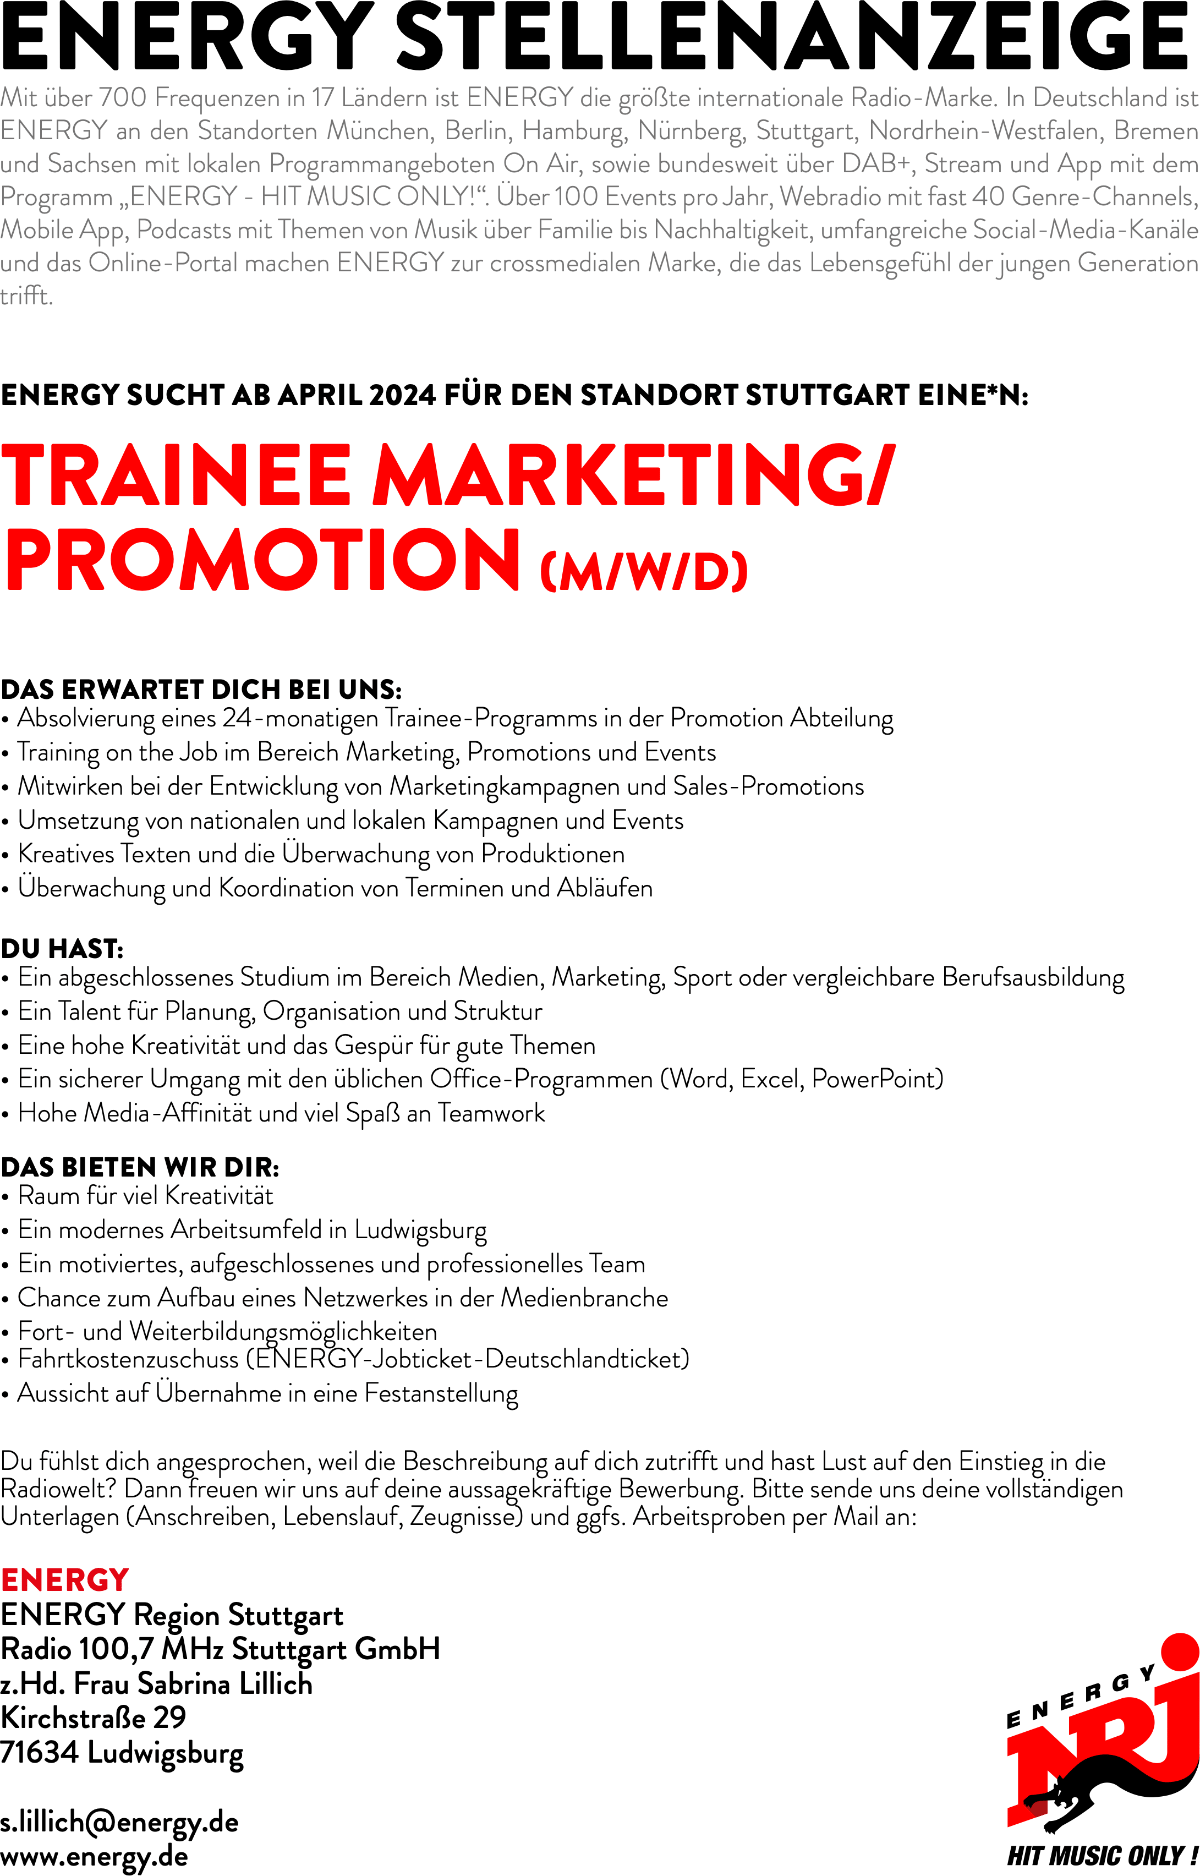 ENERGY Stuttgart sucht Trainee Marketing / Promotion (m/w/d)